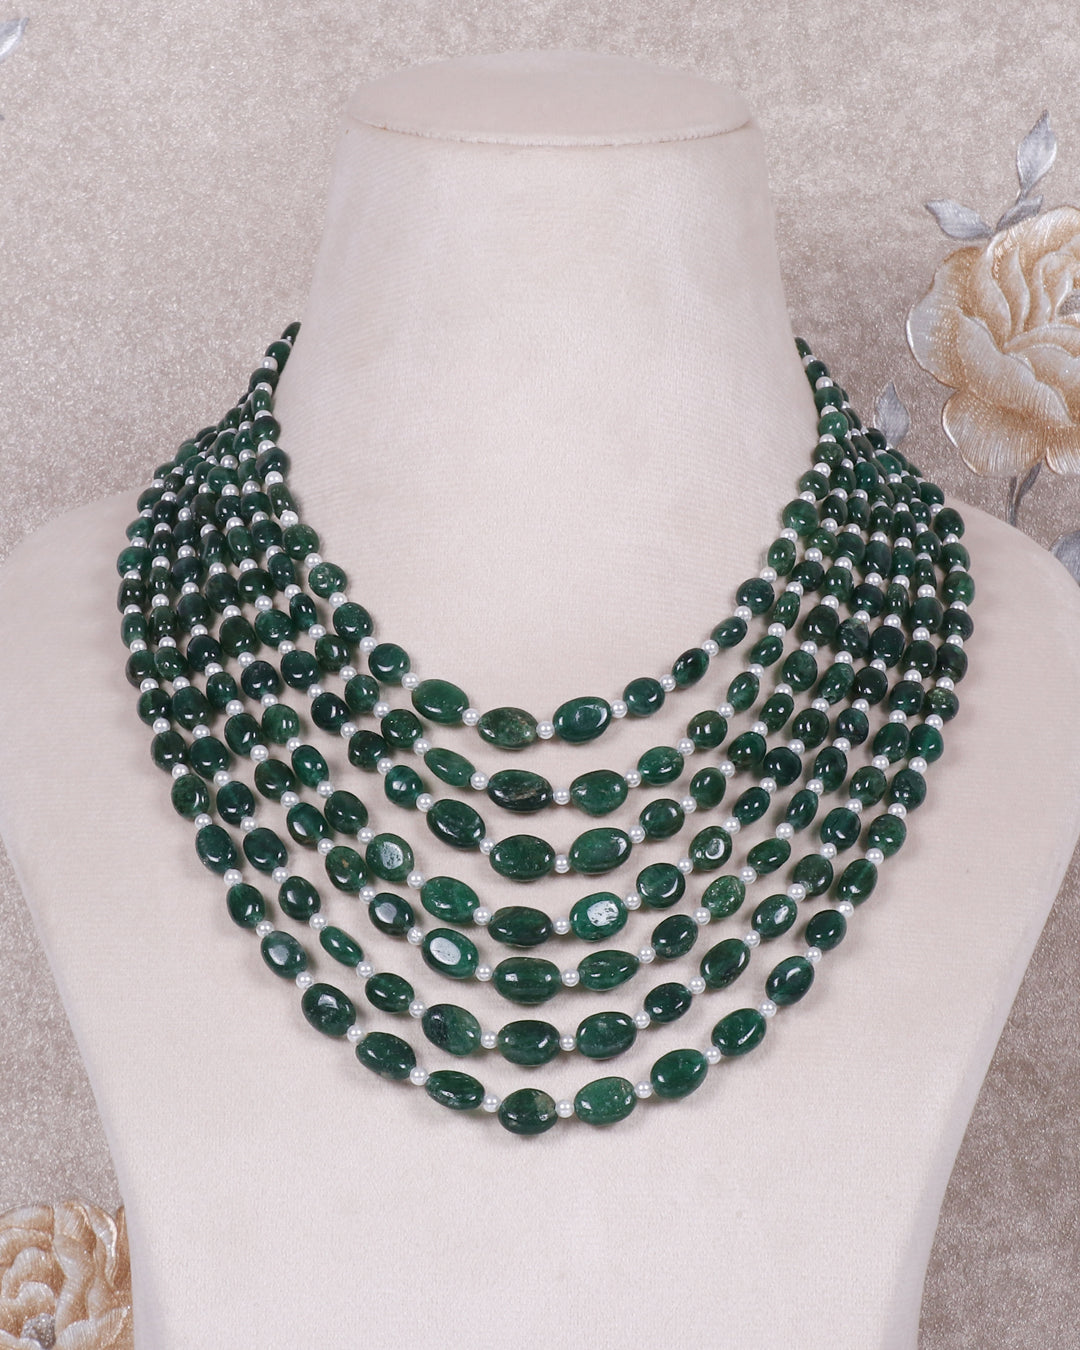 Natural Green Aventurine Gemstone Beads Necklace Jewelry